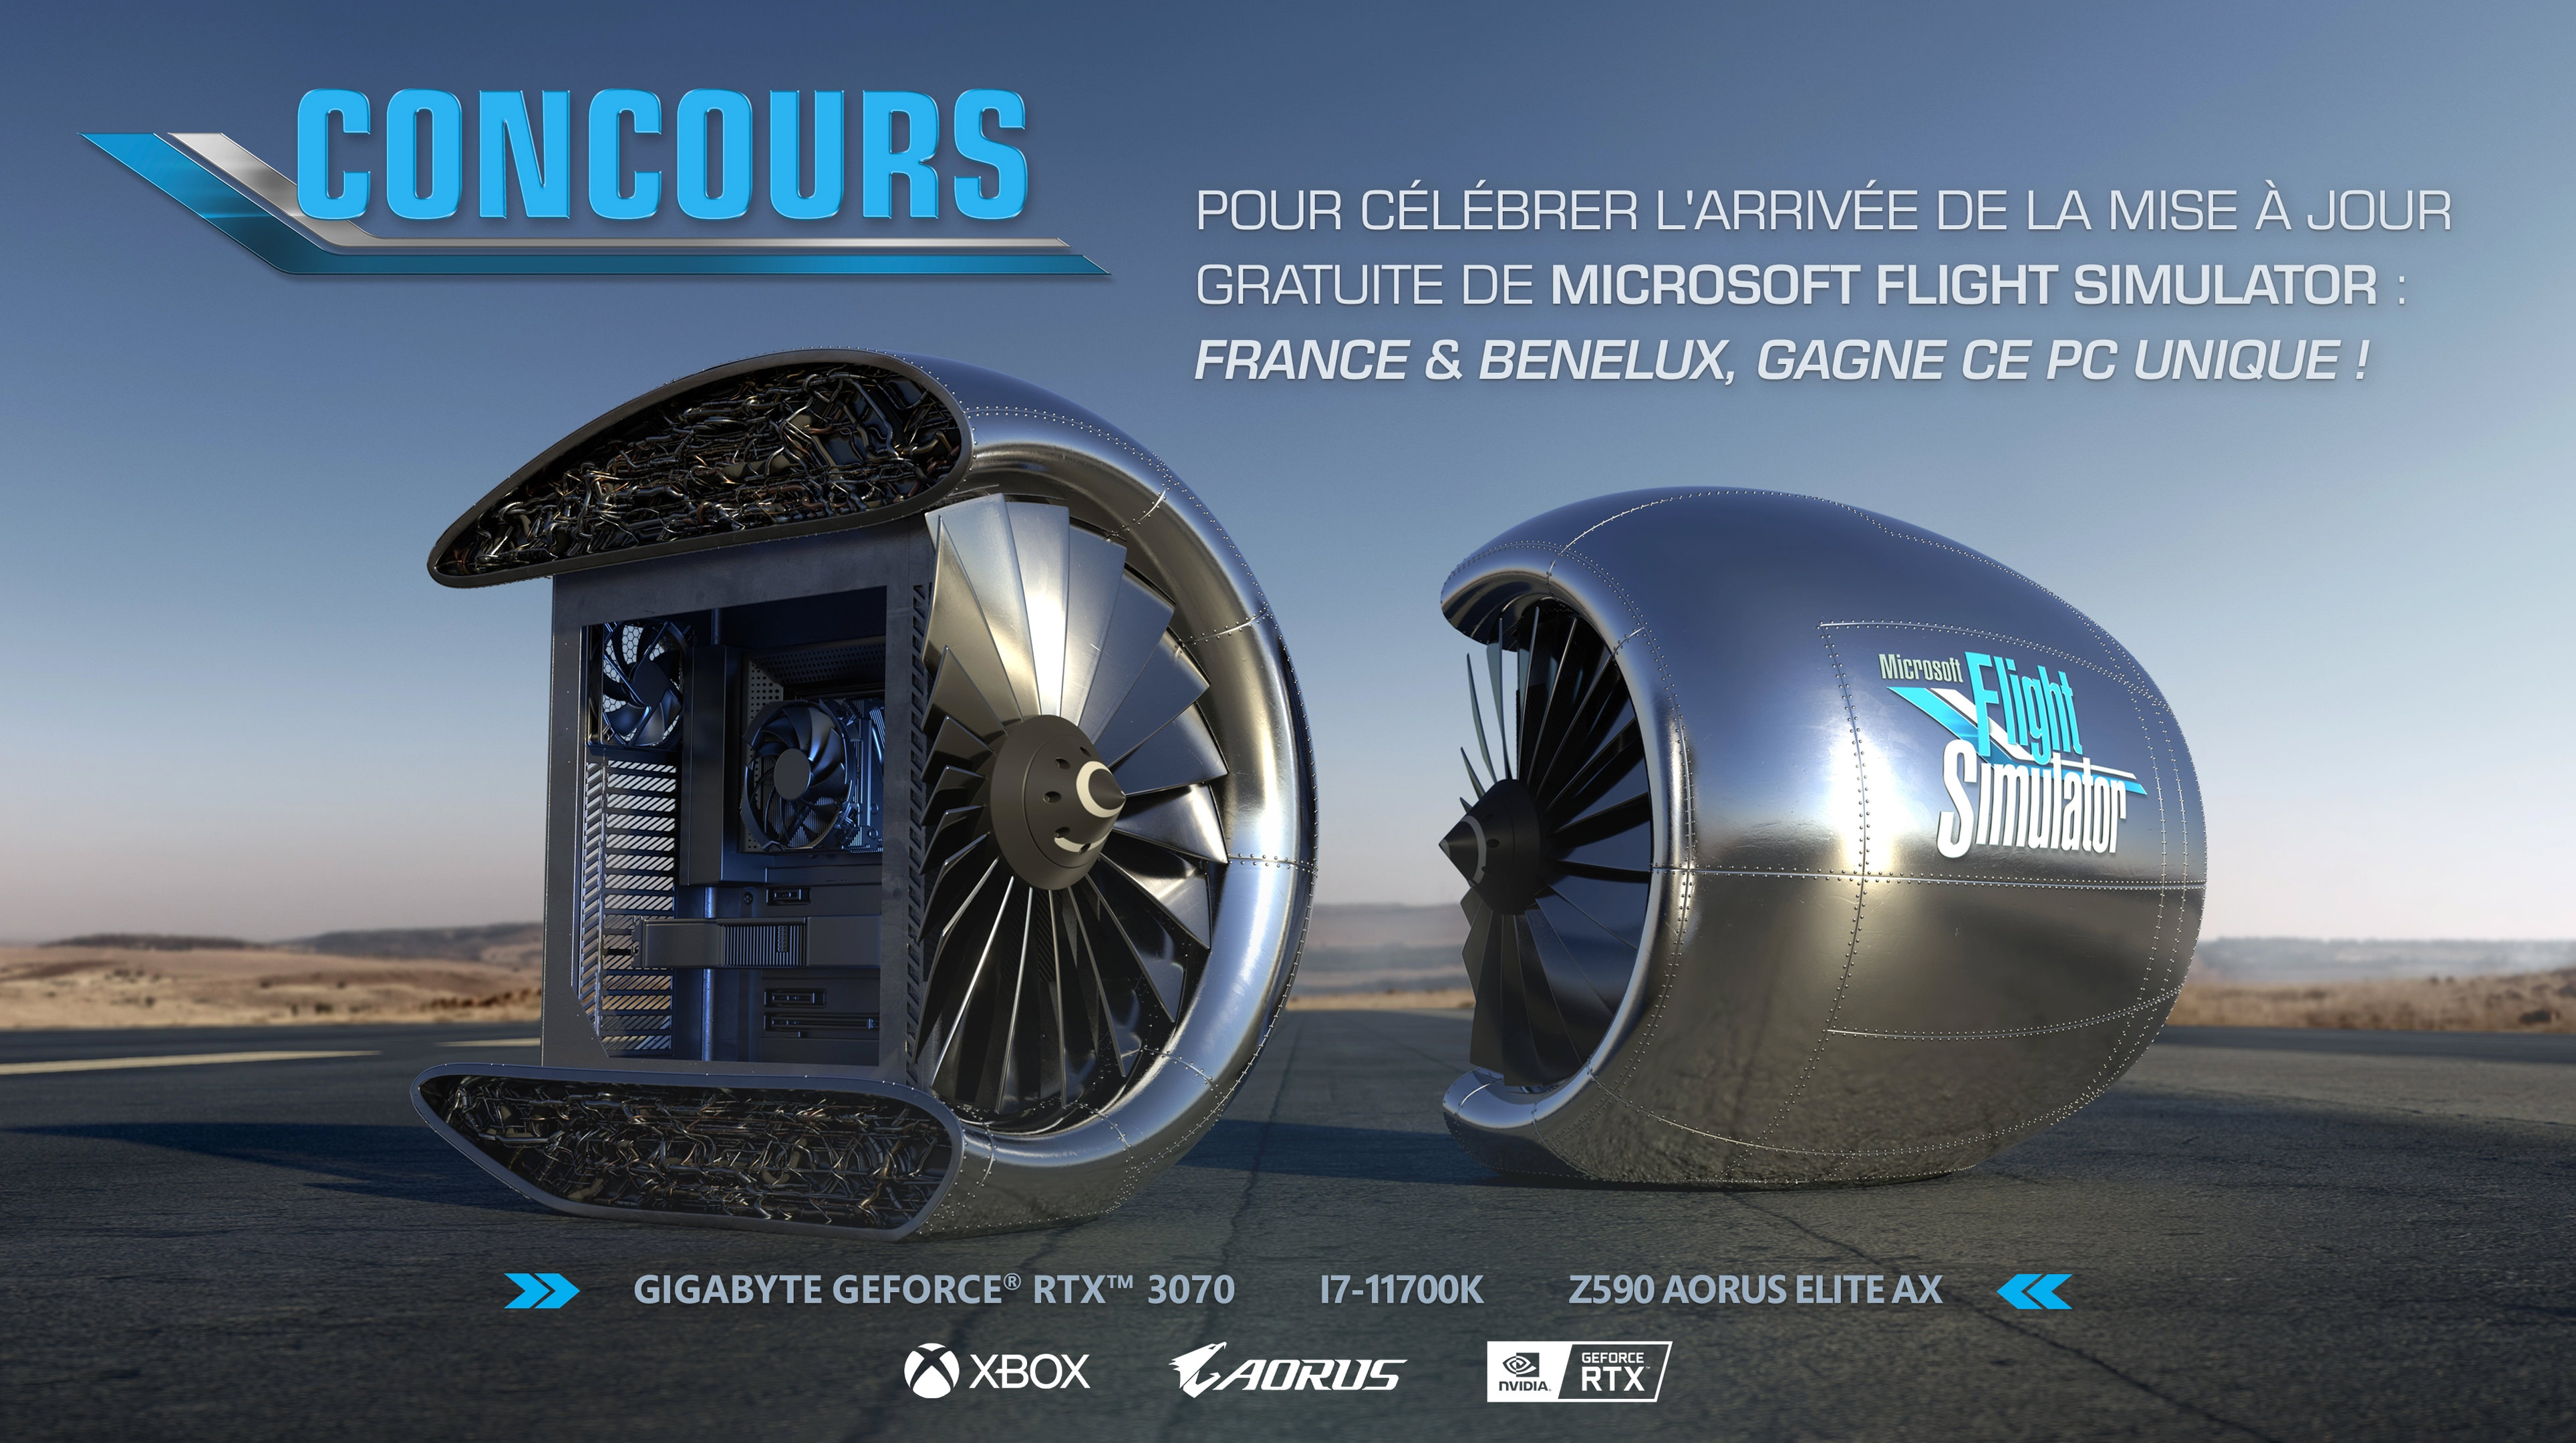 microsoft gaming jet engine pc render - کامپیوتر مایکروسافت با طراحی موتور هواپیما به یک نفر هدیه داده می‌شود